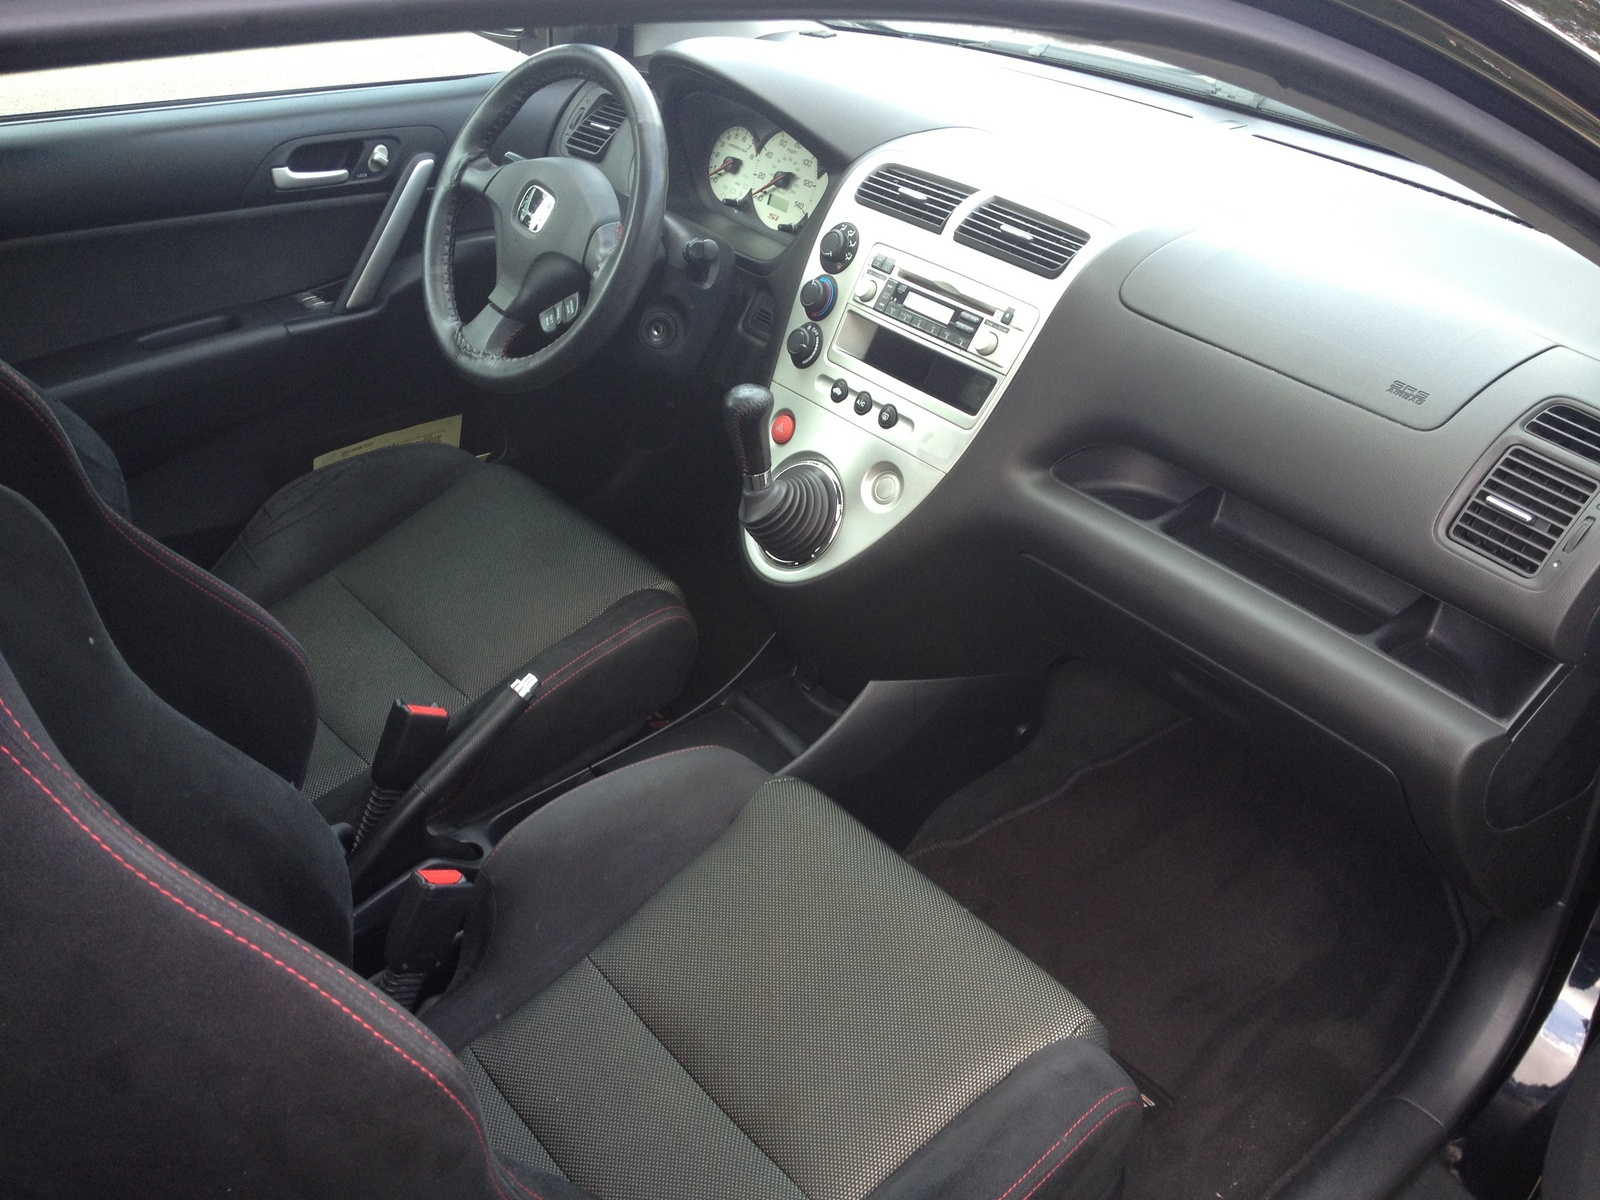 2004 Honda civic si hatchback interior #5